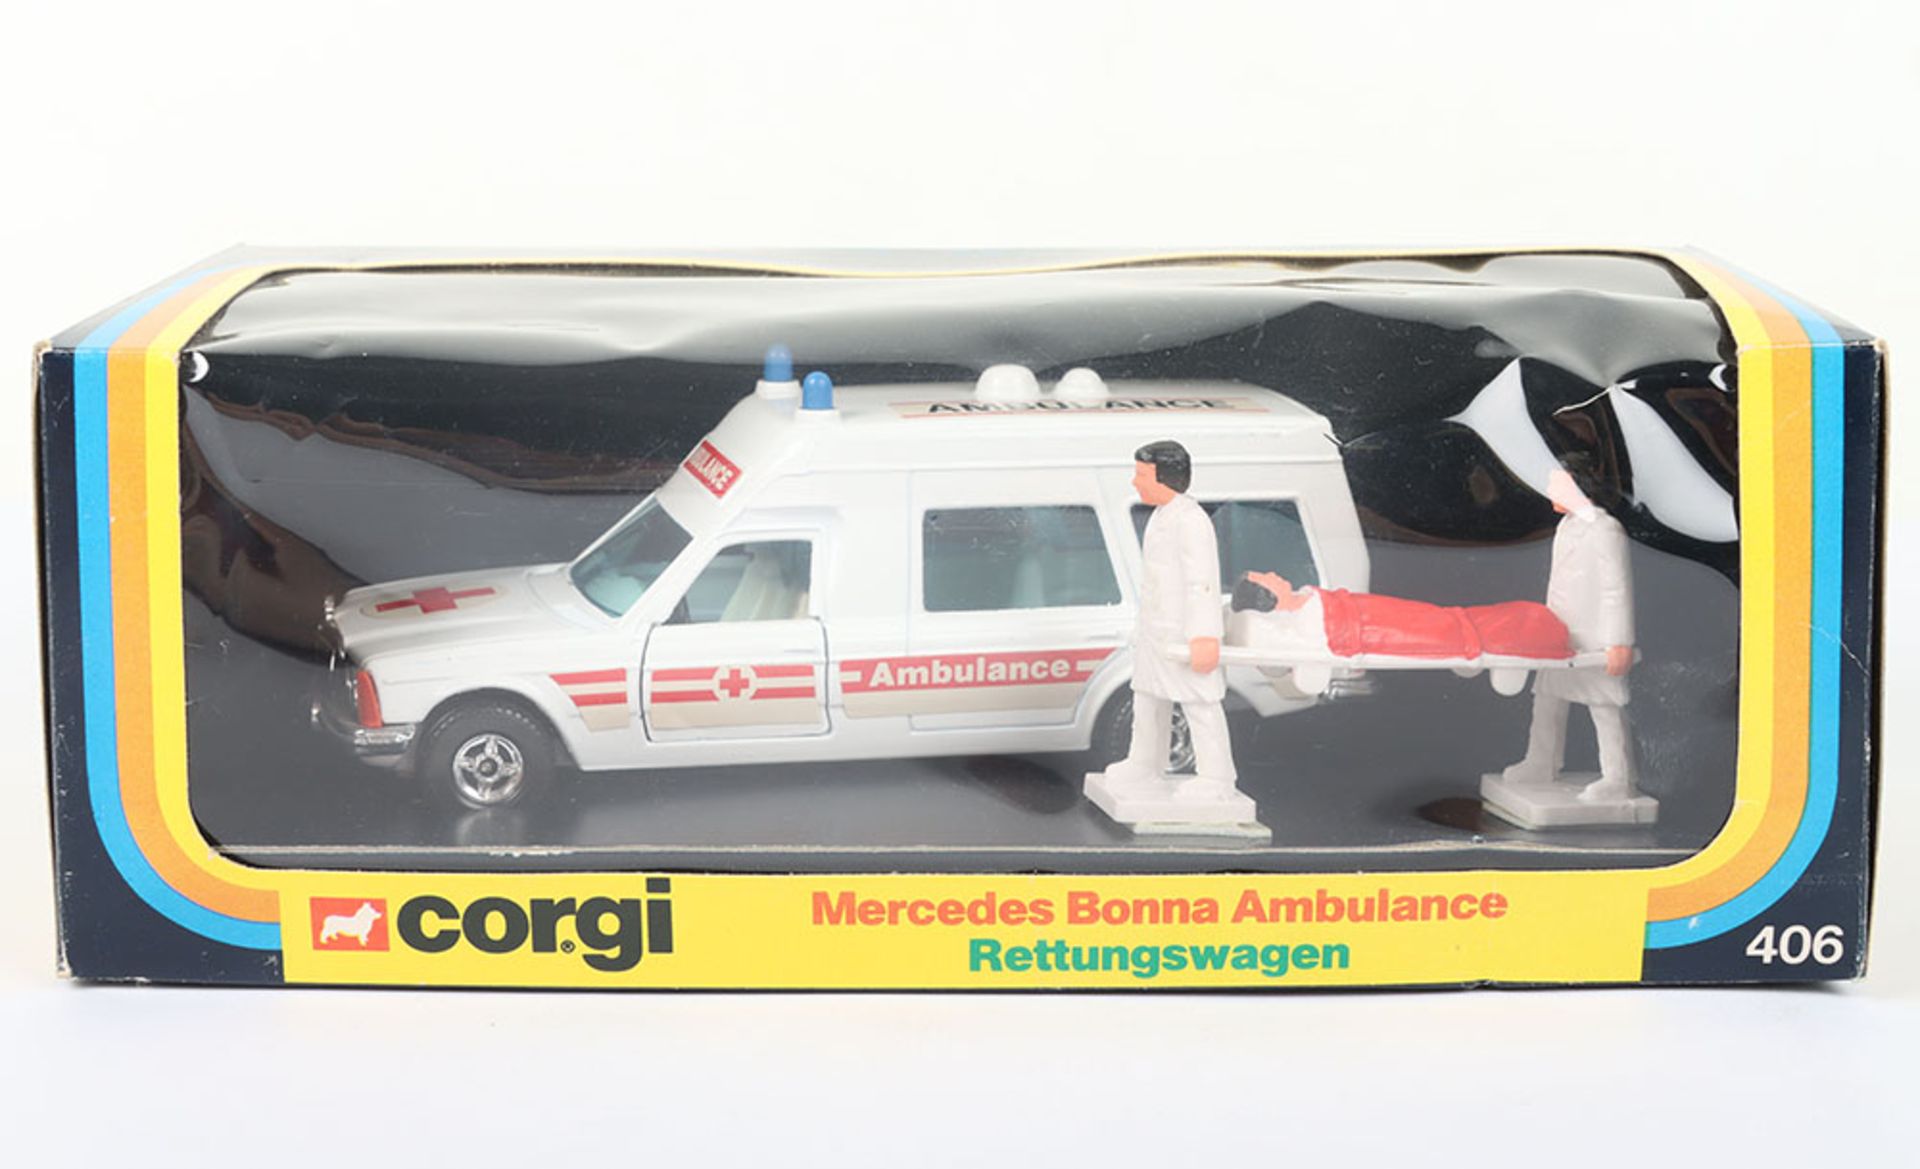 Corgi 406 Mercedes Bonna Ambulance